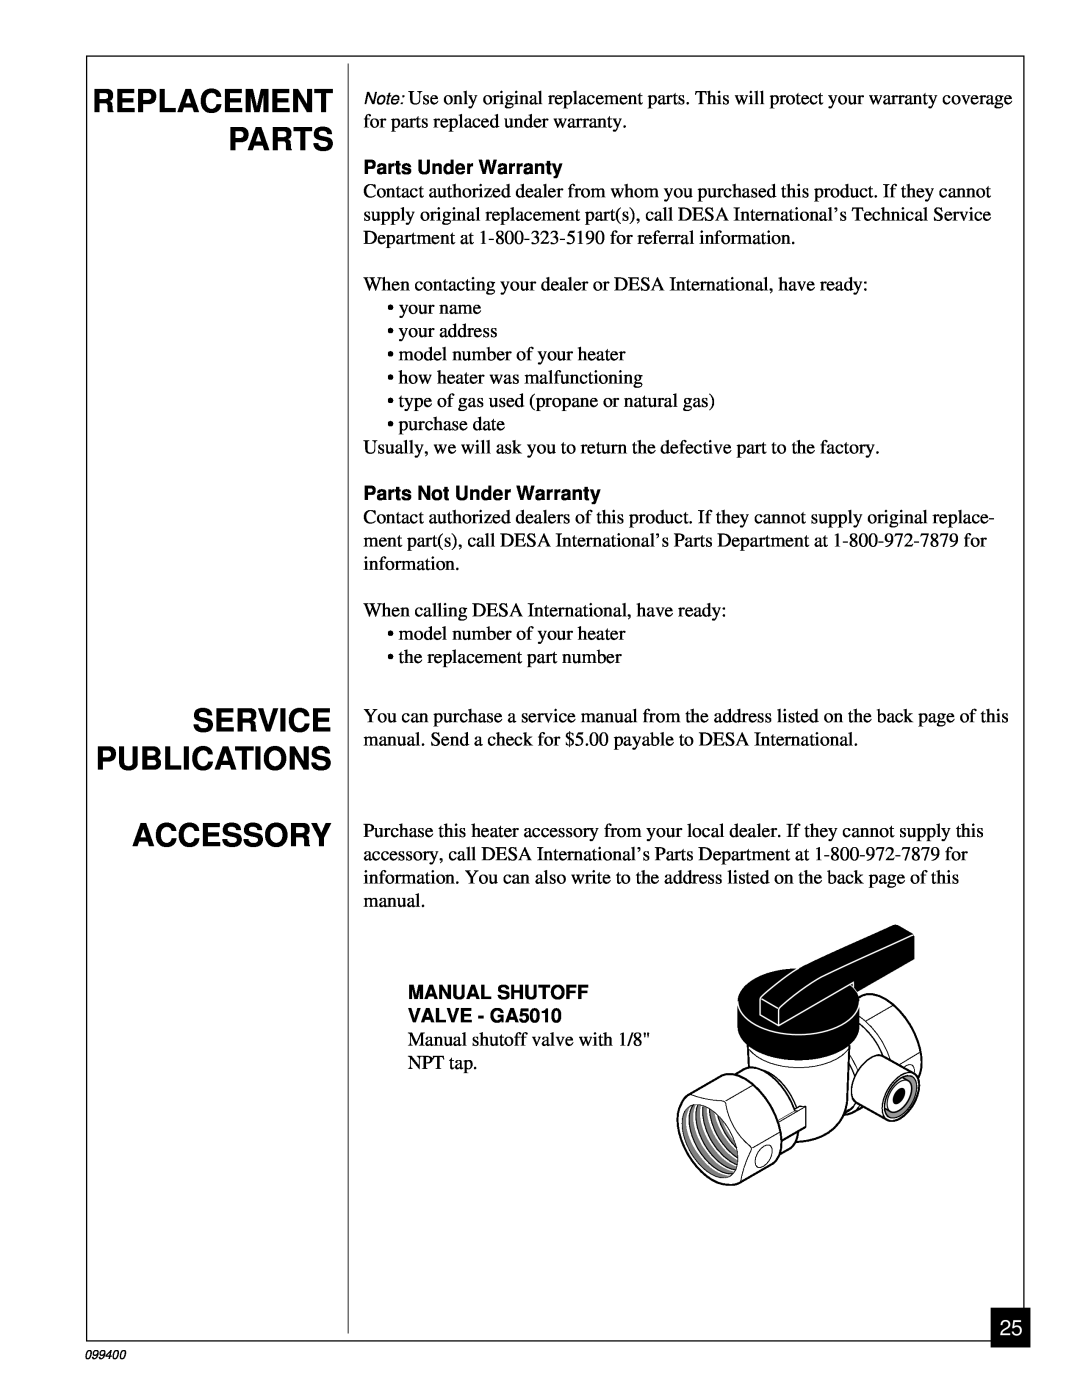 Desa VN1000B Replacement Parts Service Publications Accessory, Parts Under Warranty, Parts Not Under Warranty 